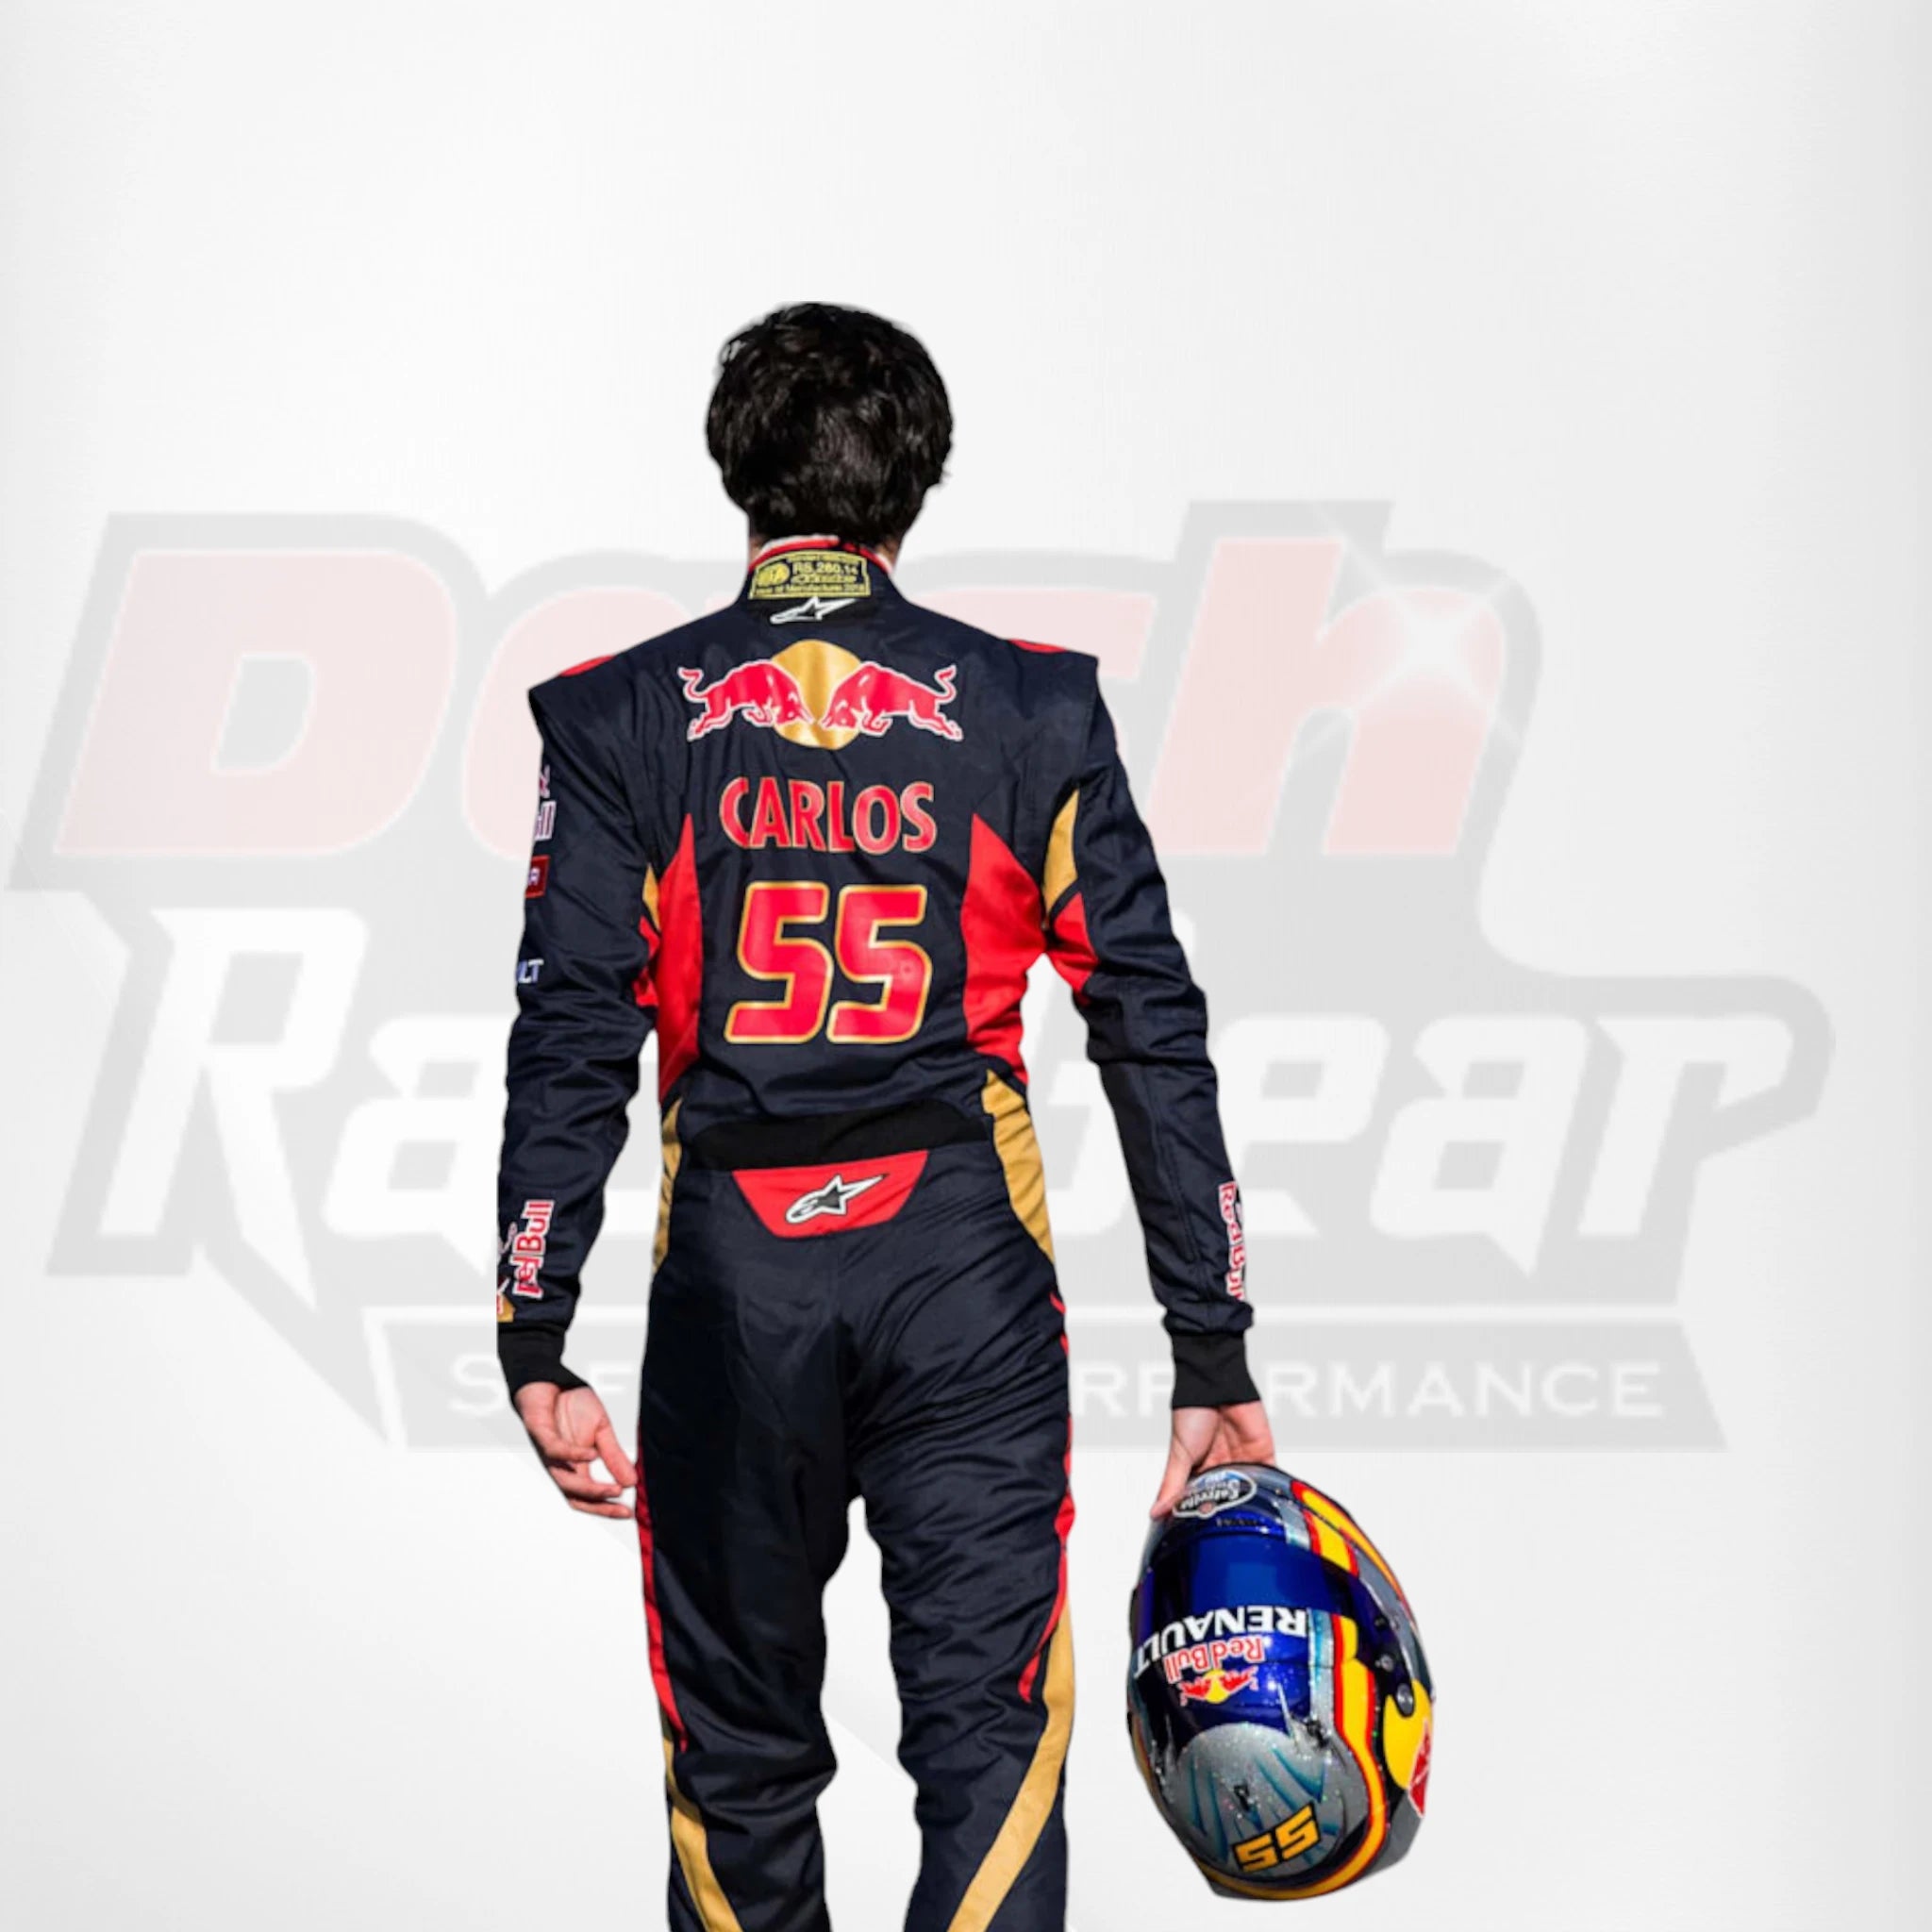 2015 Red Bull Carlos Sainz F1 Race Suit